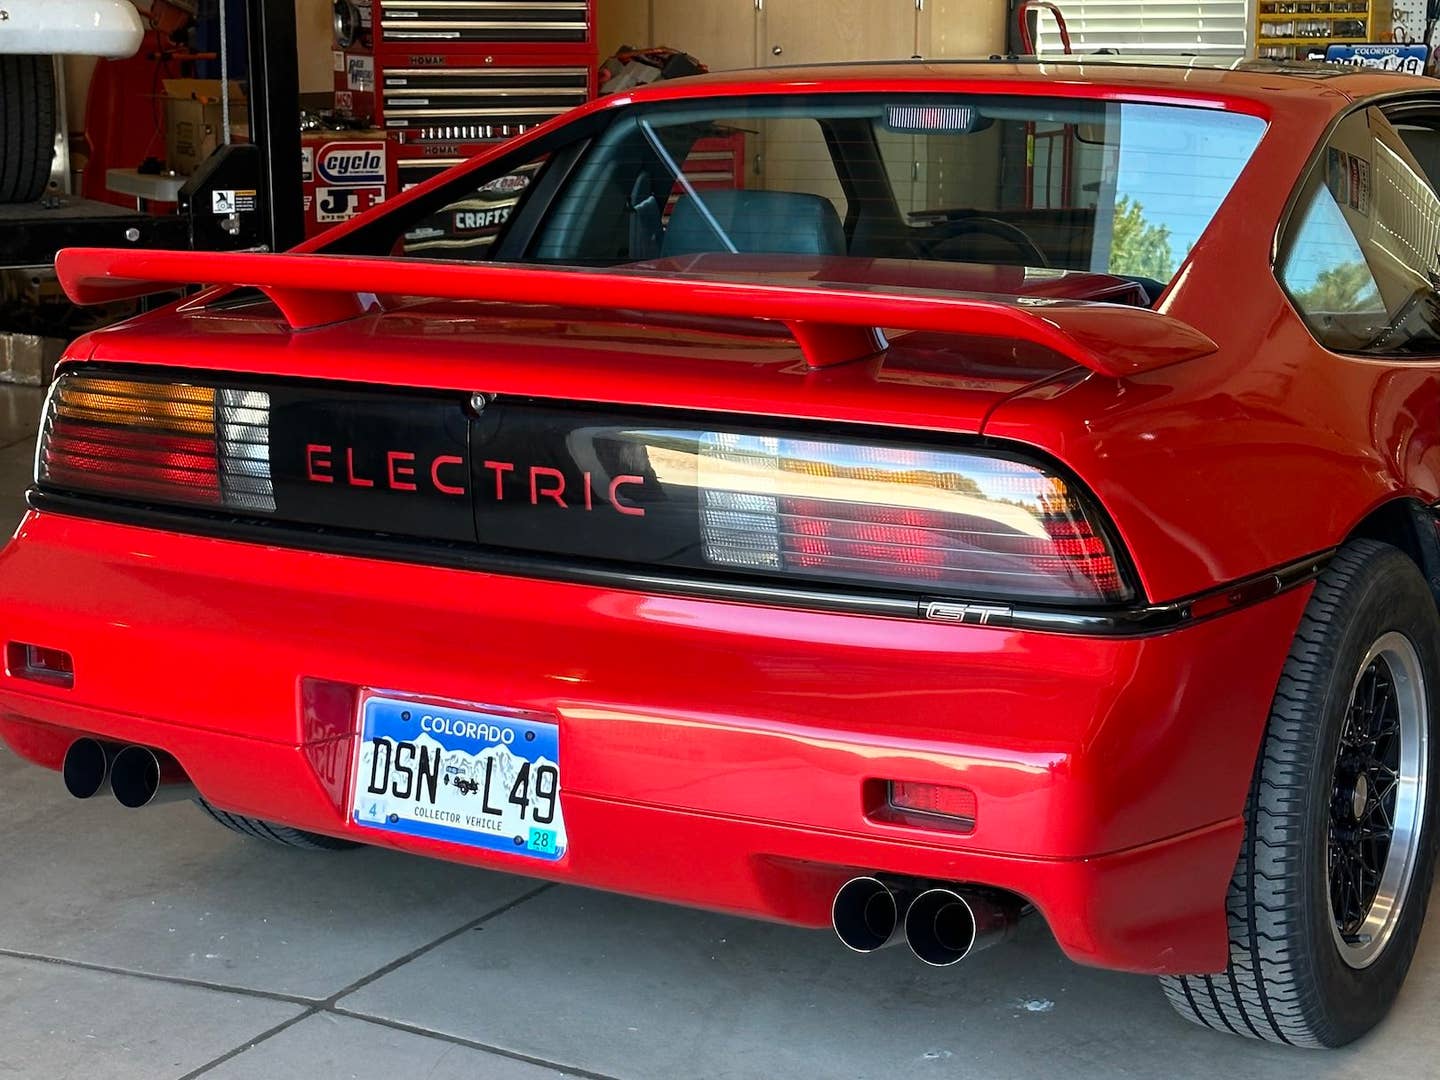 1988 Pontiac Fiero GT EV by Classic EV Conversions. The rear panel says &quot;electric&quot; instead of Pontiac.